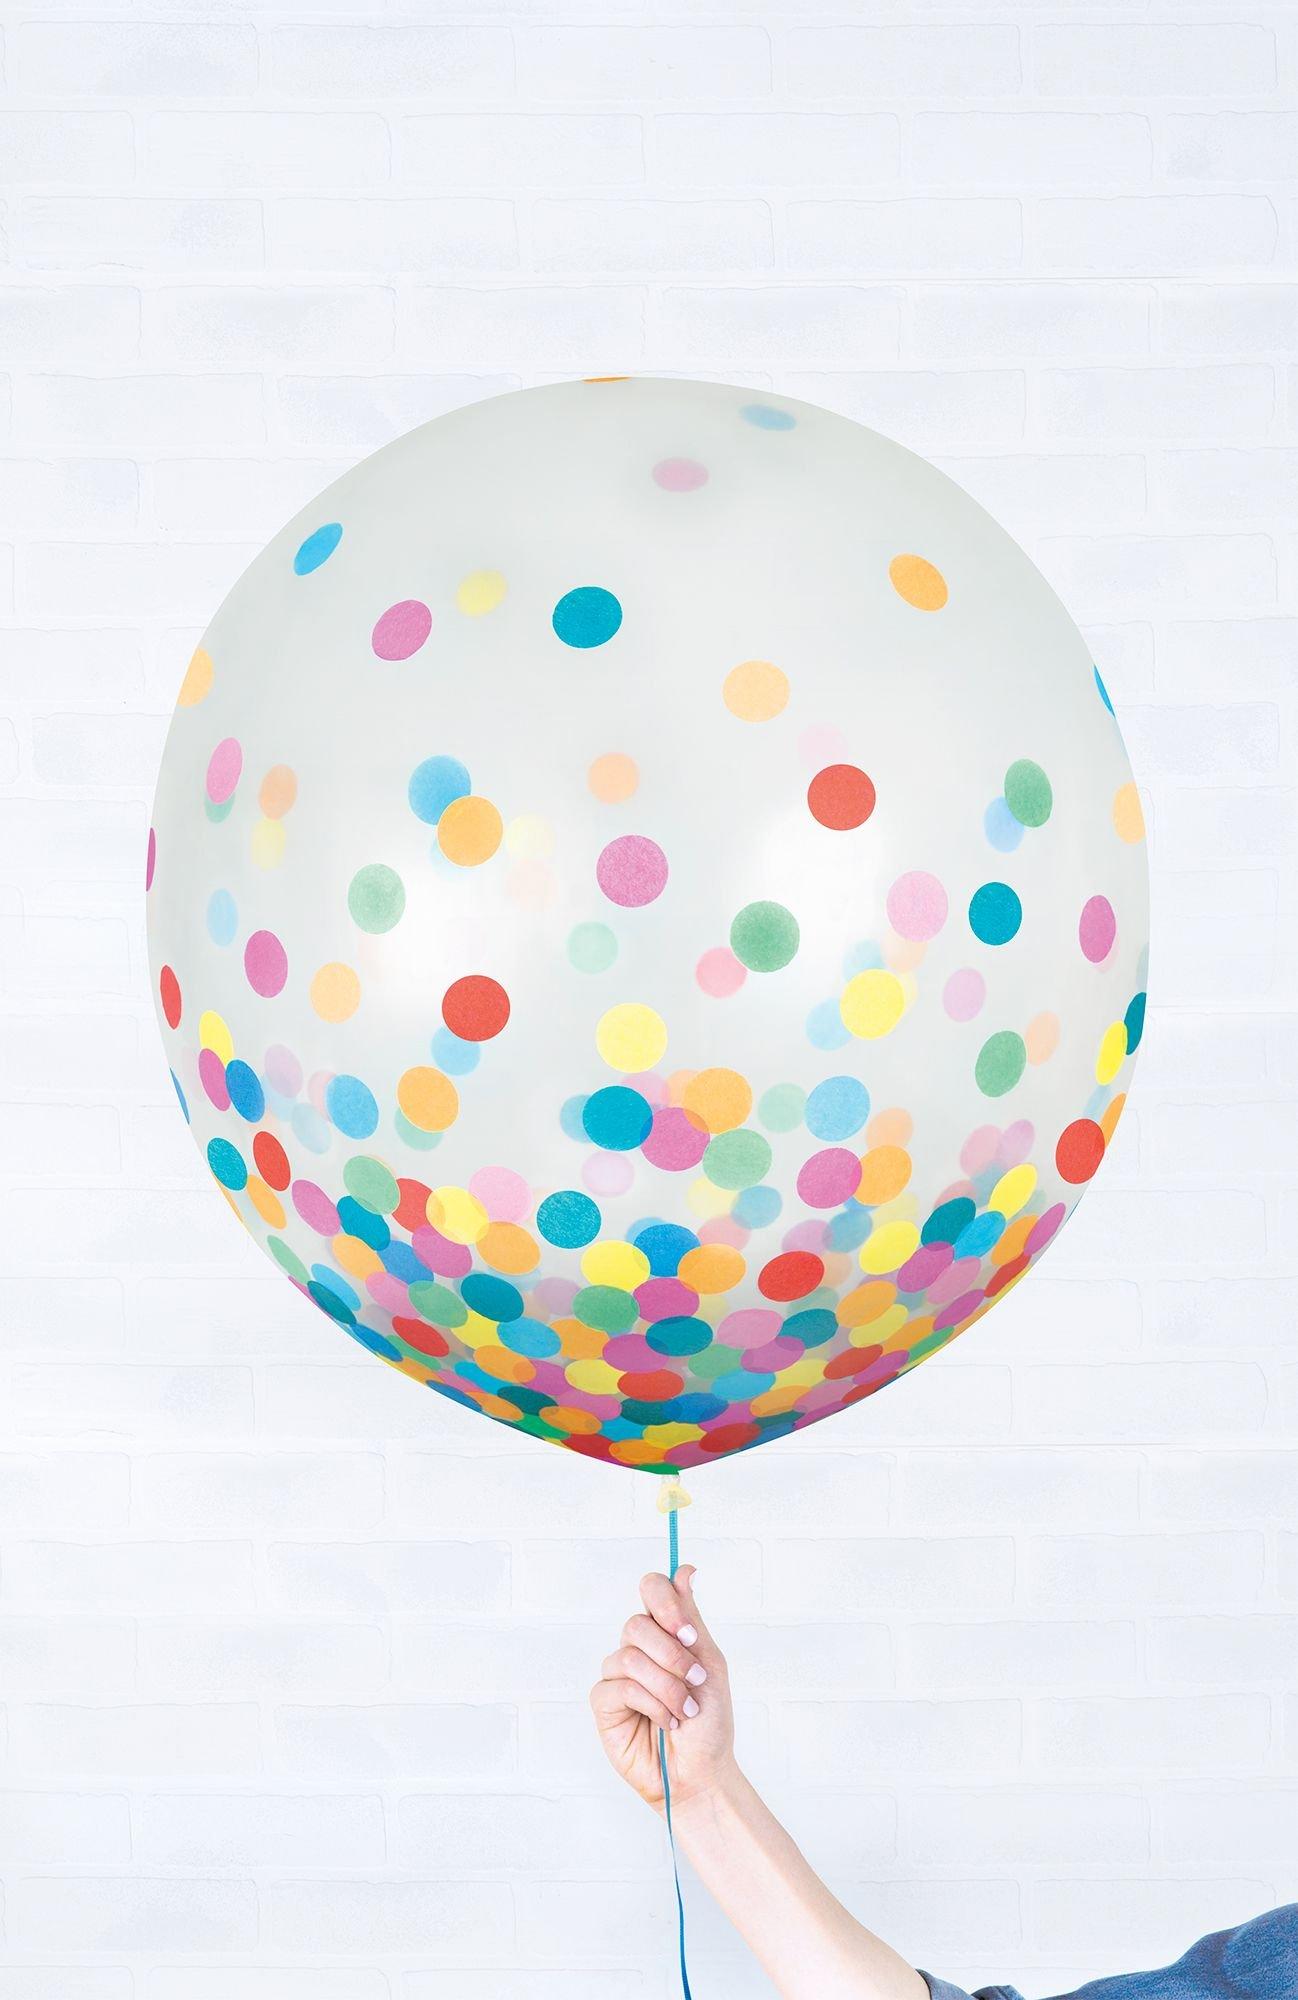 Balloon Accessories  Maximize The Visual Impact of Your Balloon Decor